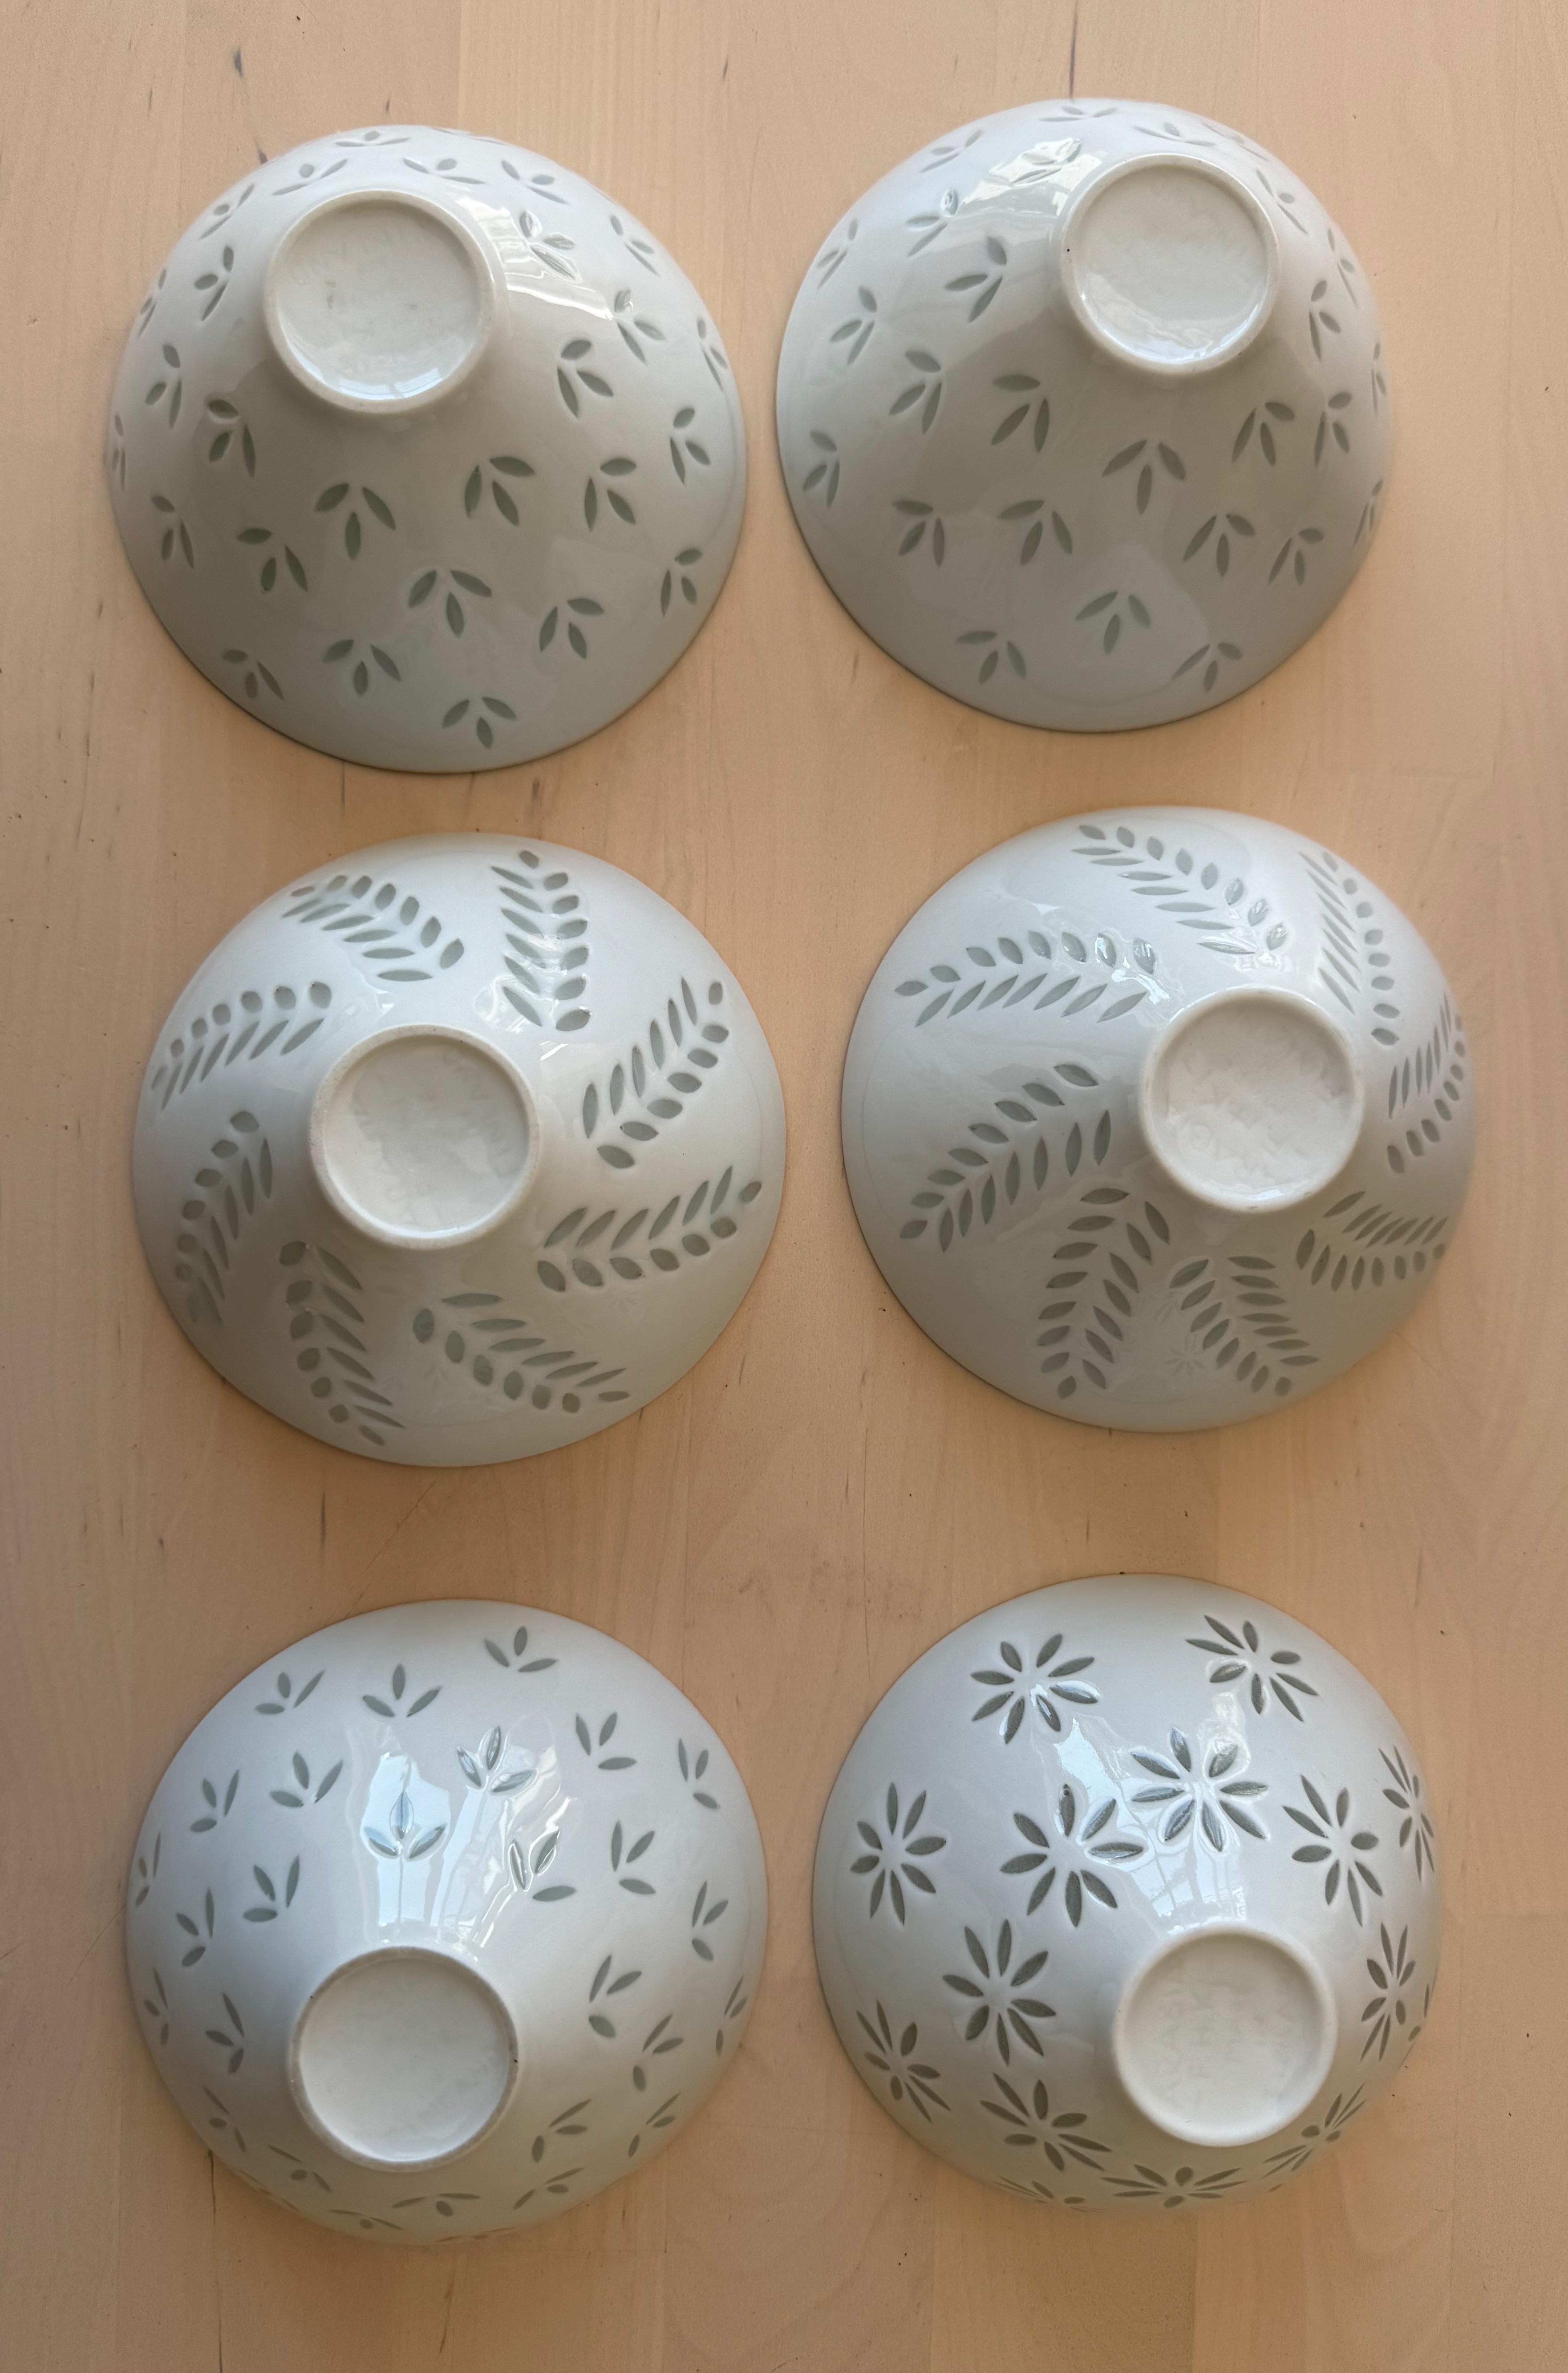 Six pieces of Scandinavian modern rice grain porcelain bowls by Friedl Holzer-Kjellberg for Arabia in Finland.
A delicate 